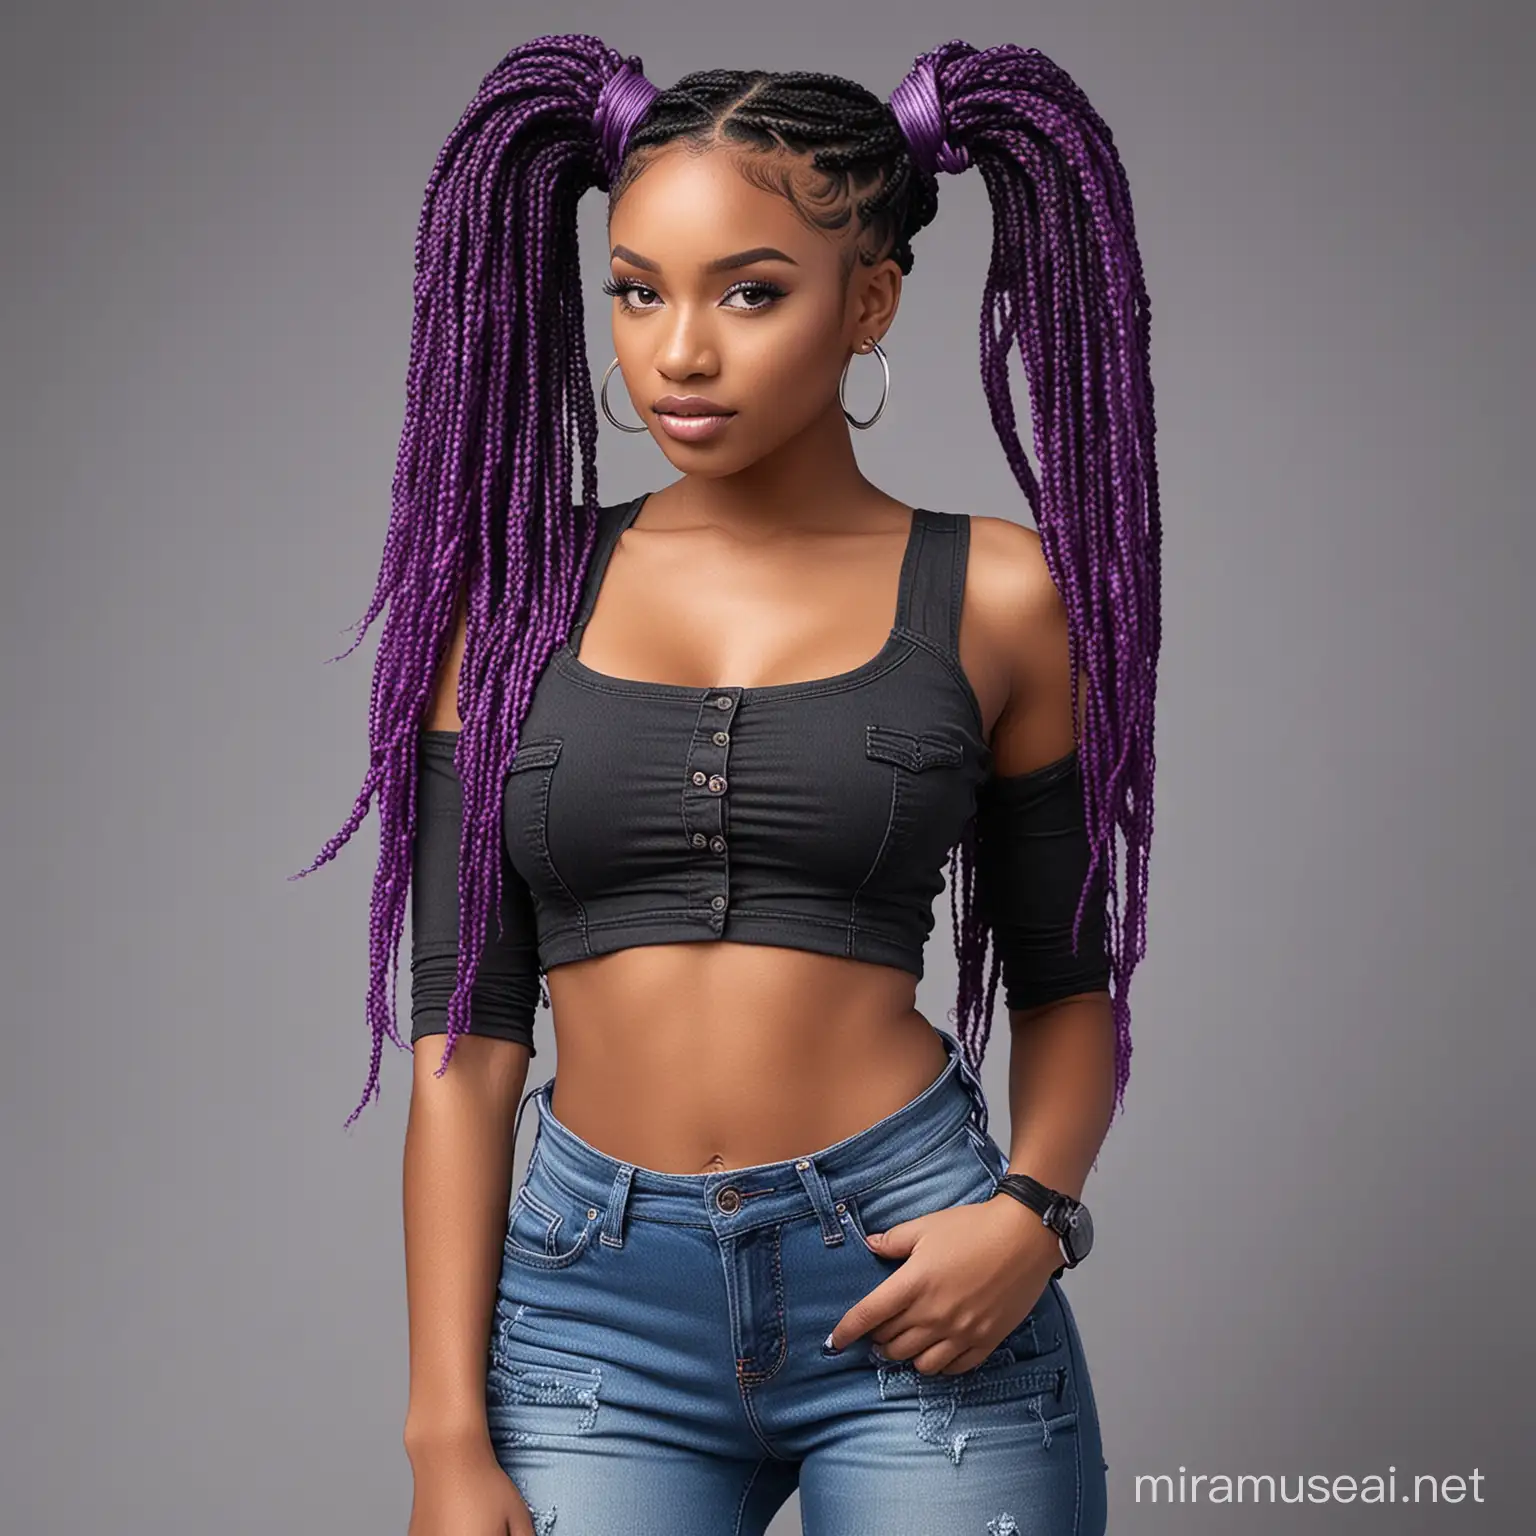 Stylish Black Woman with Purple Braids in Denim Attire